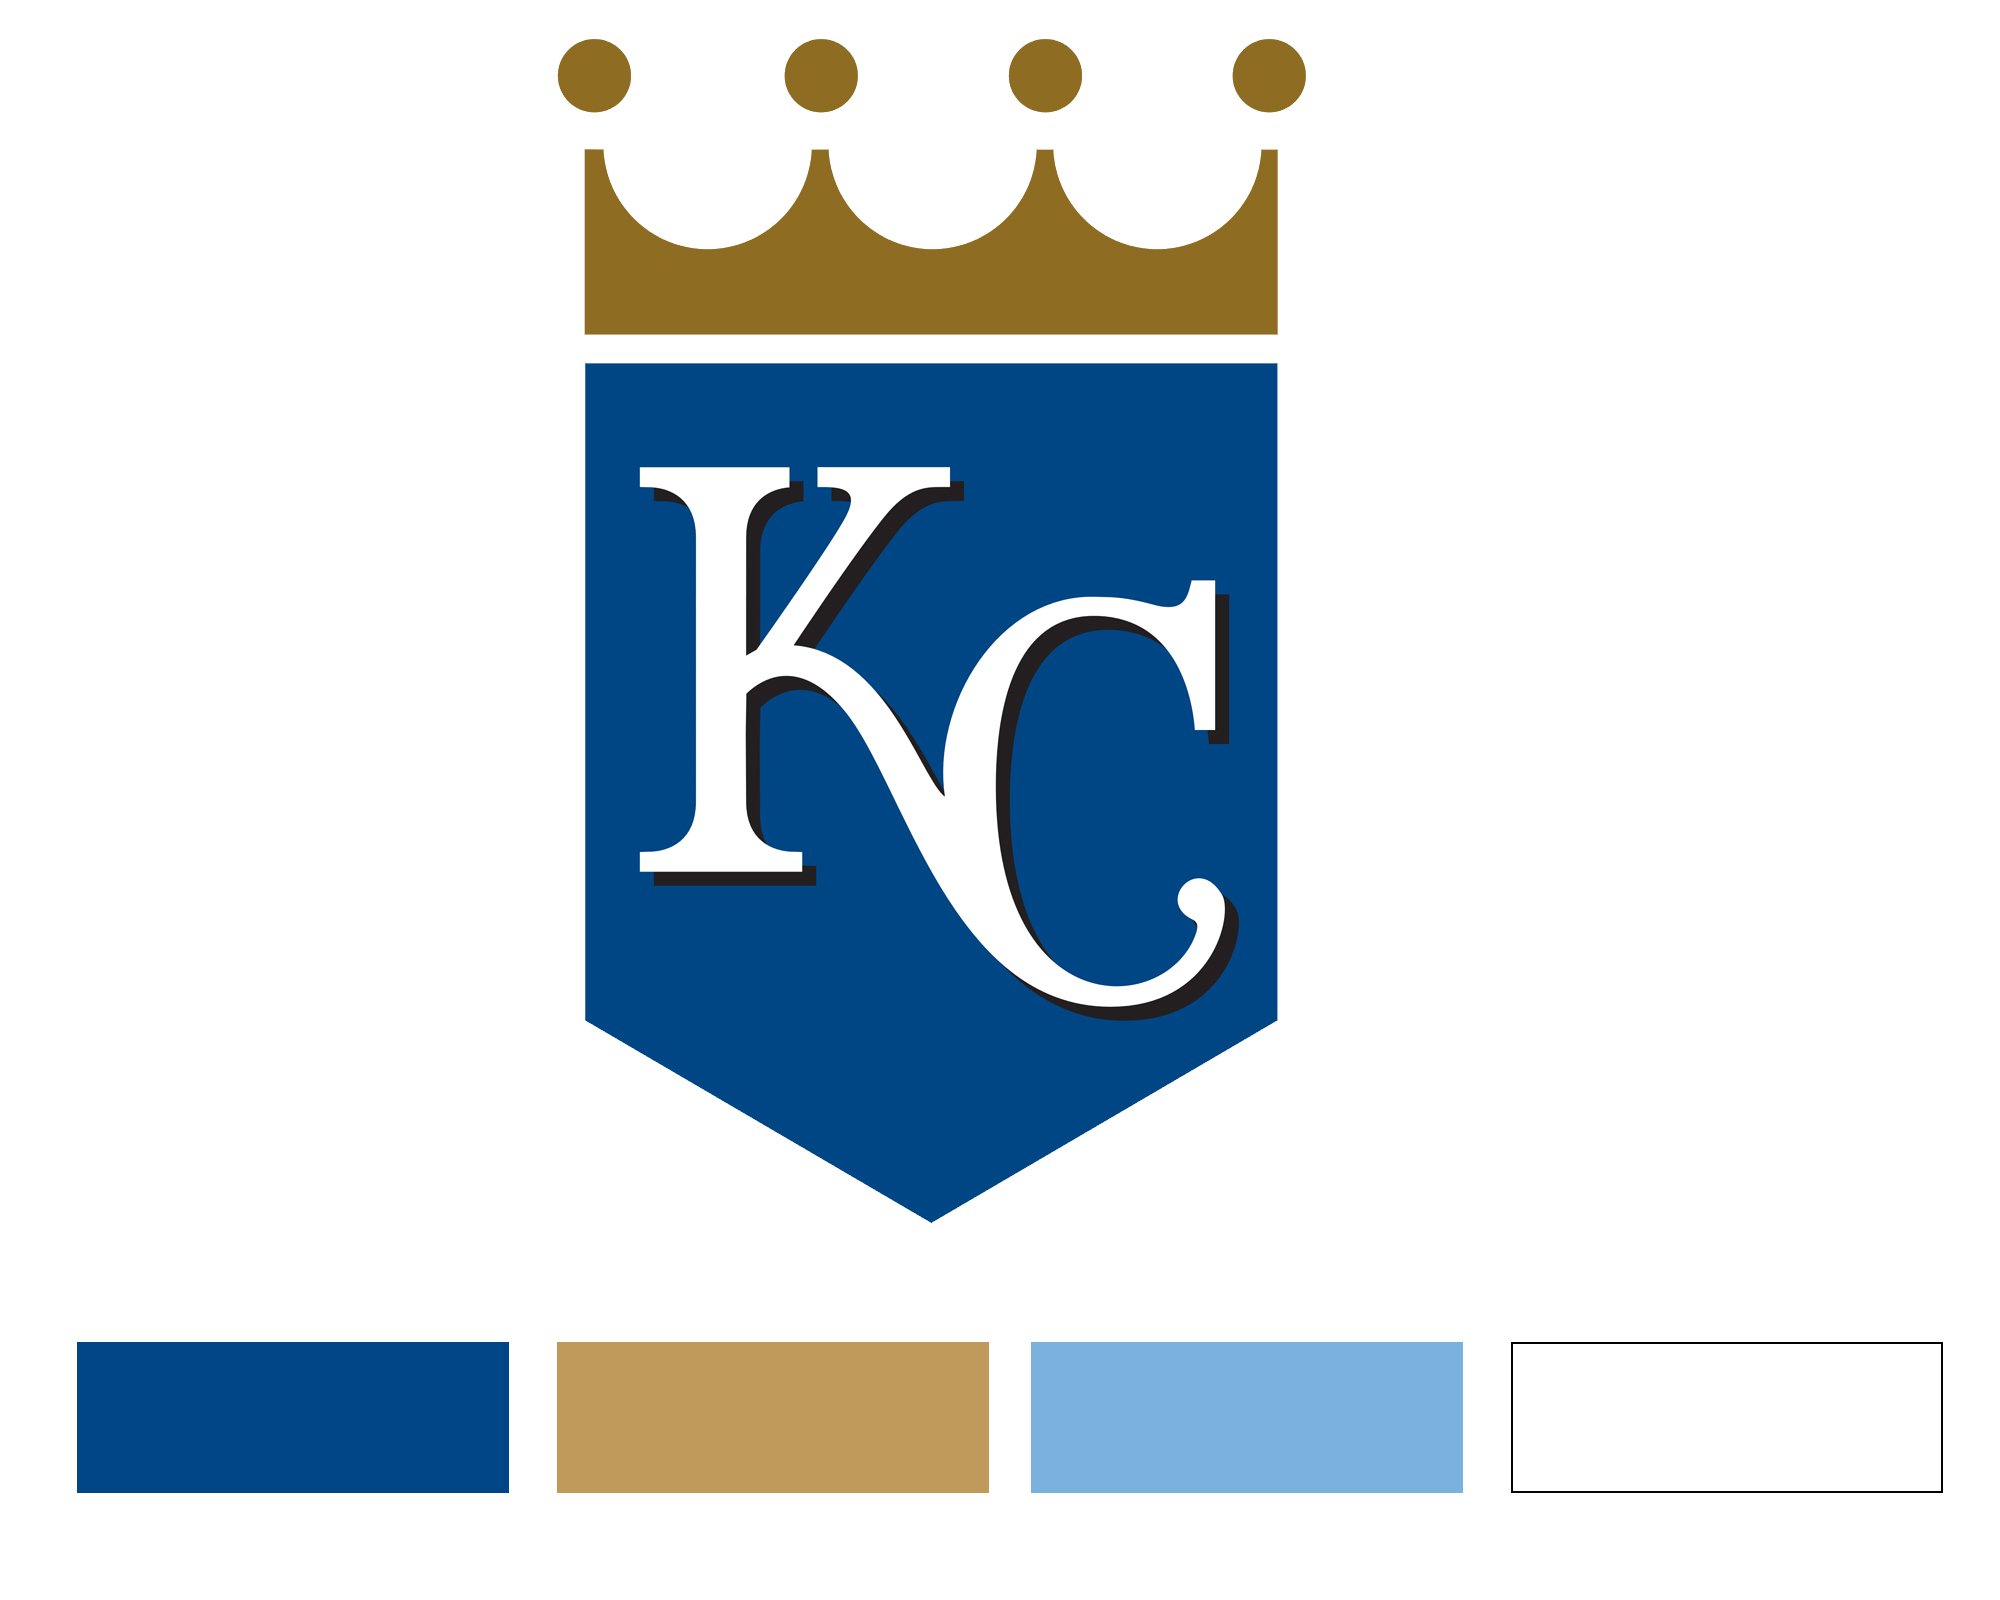 8” KC Royals Logo Sign